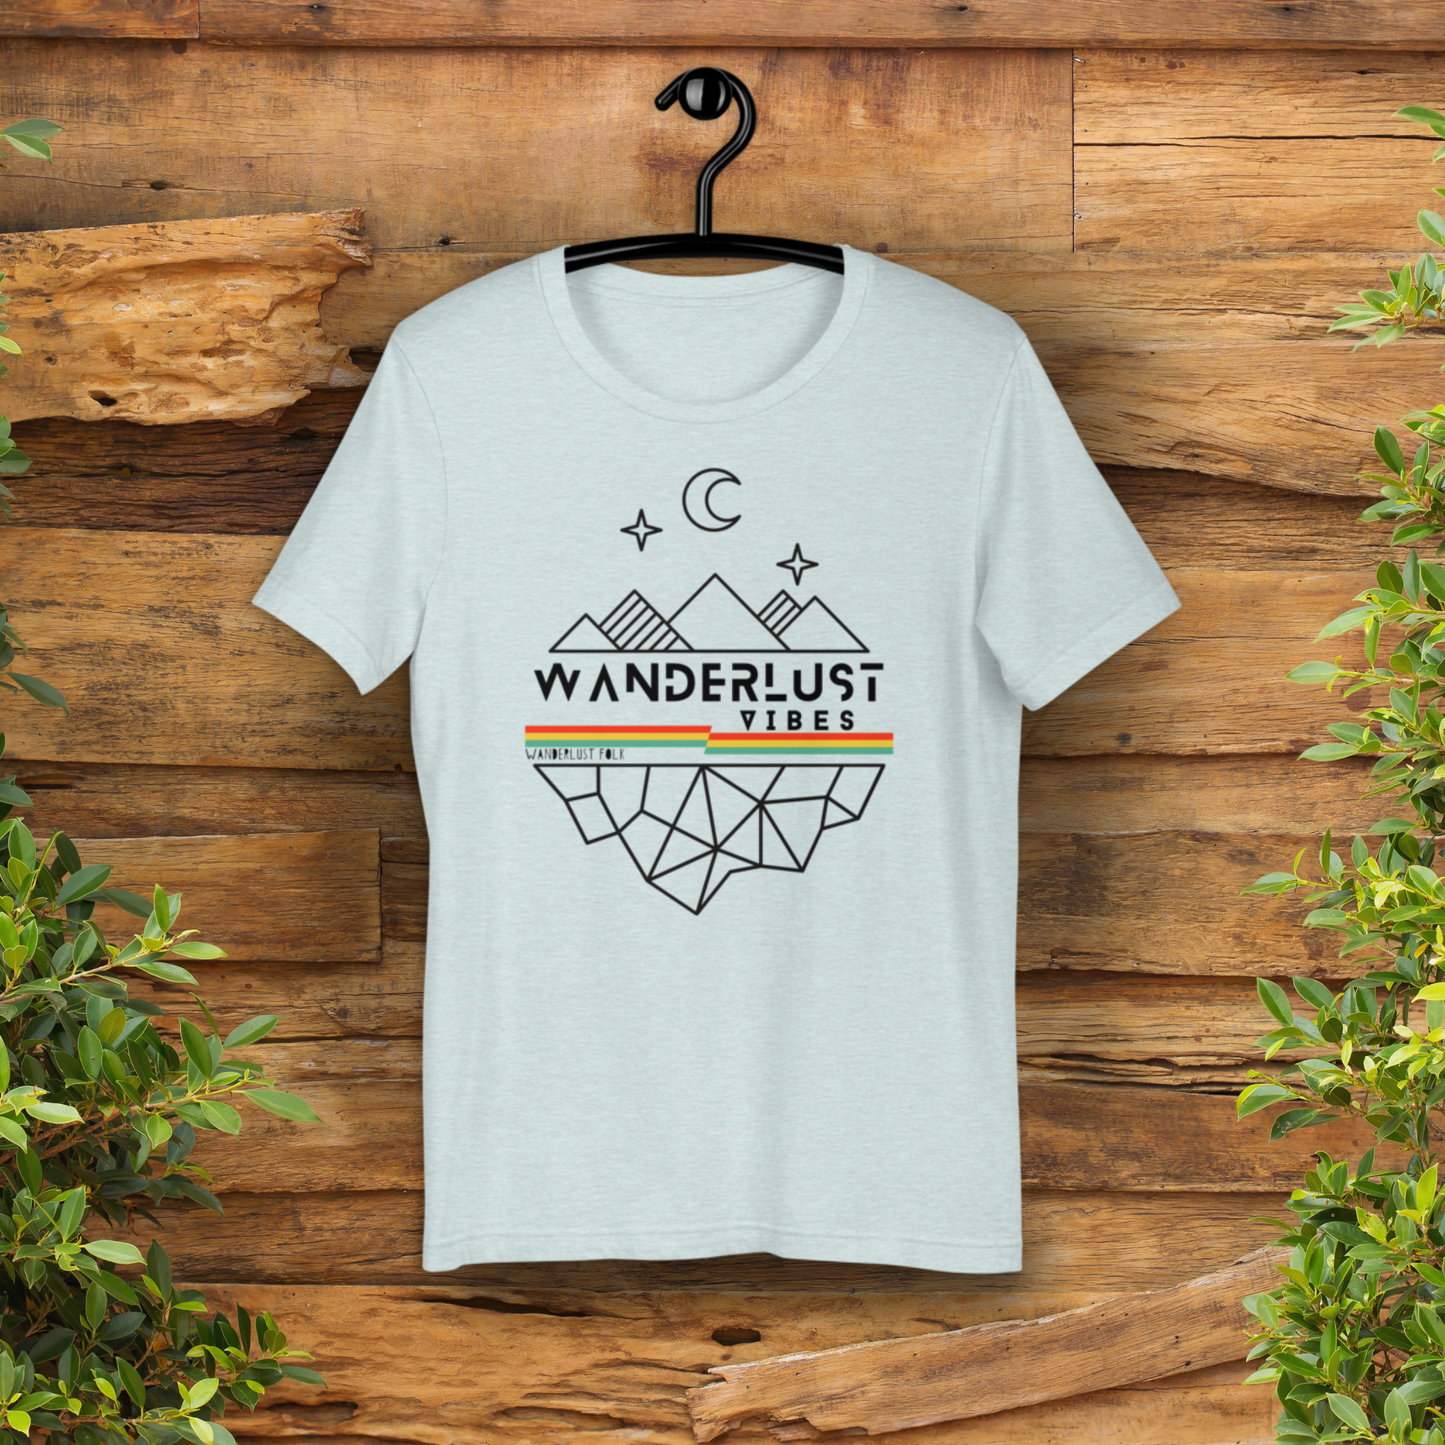 Wanderlust Vibes | Unisex t-shirt